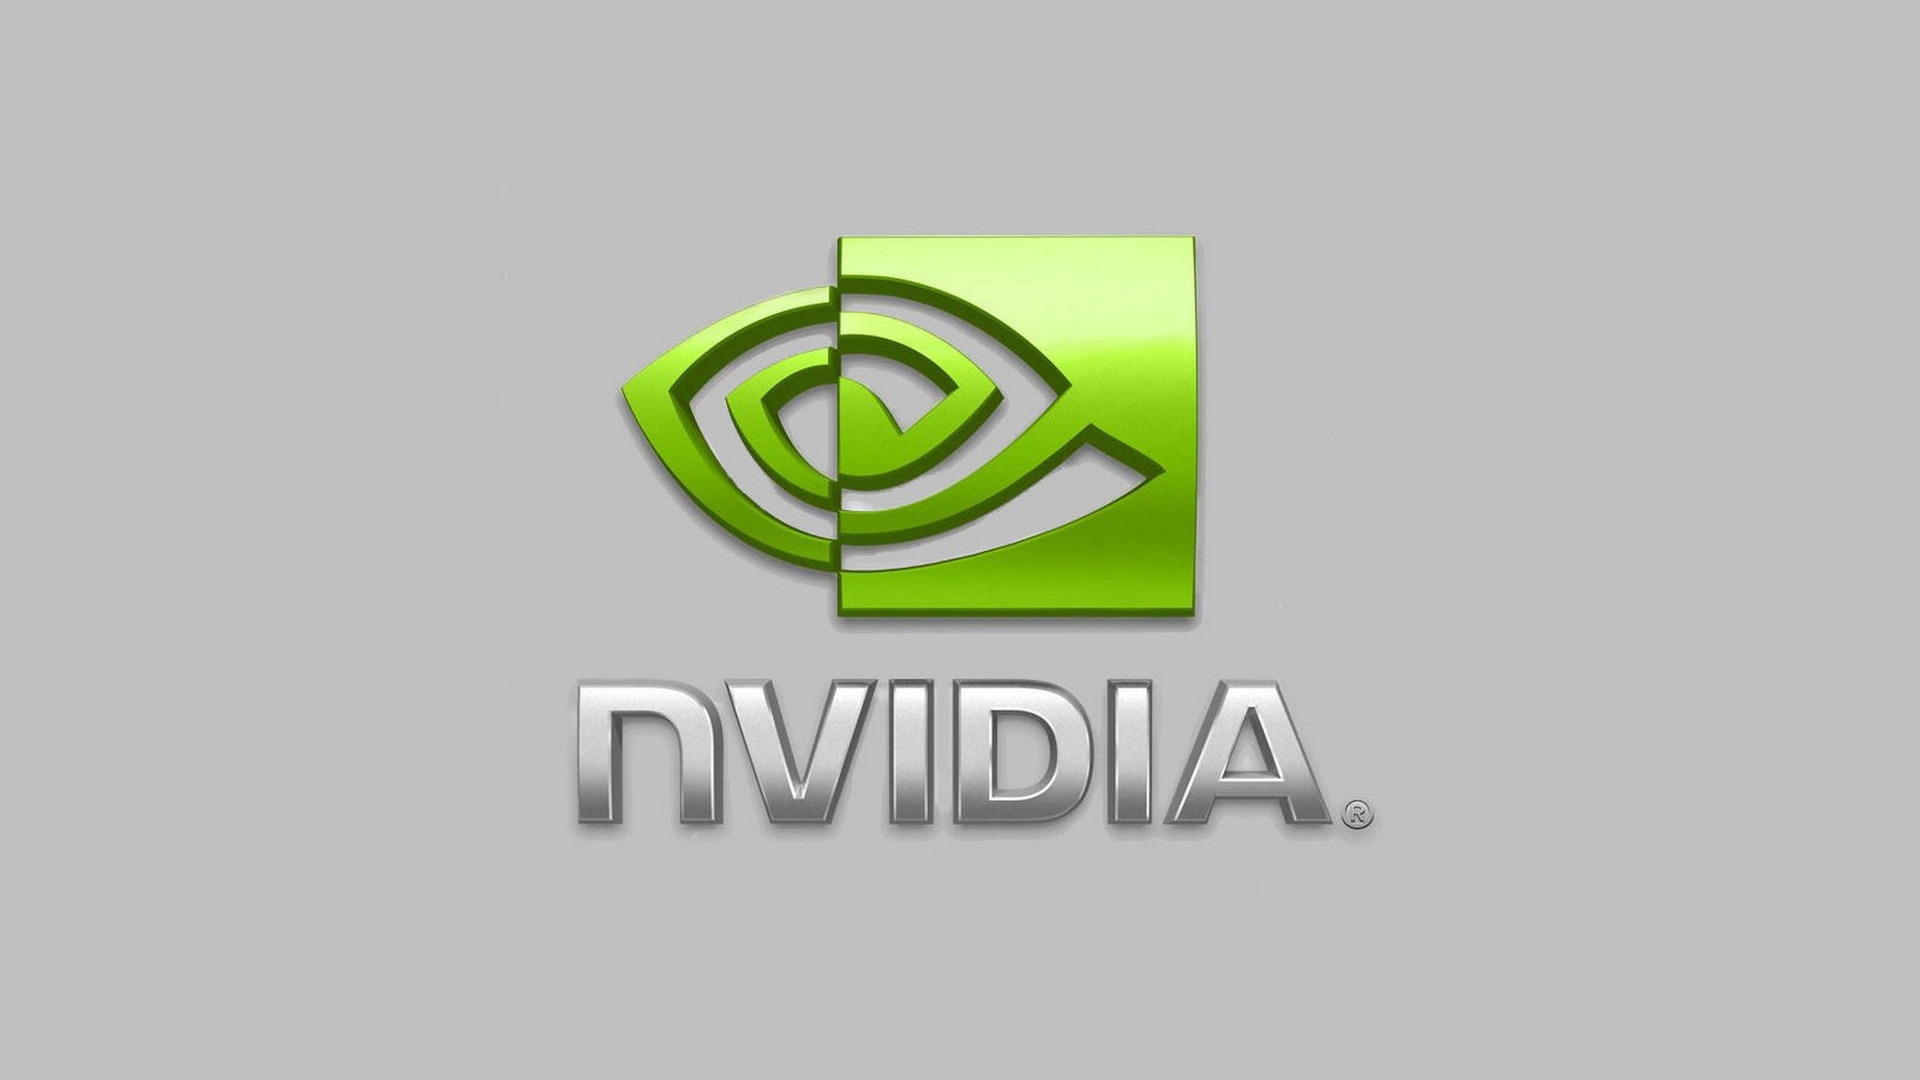 nVIDIA Logo for 1920 x 1080 HDTV 1080p resolution